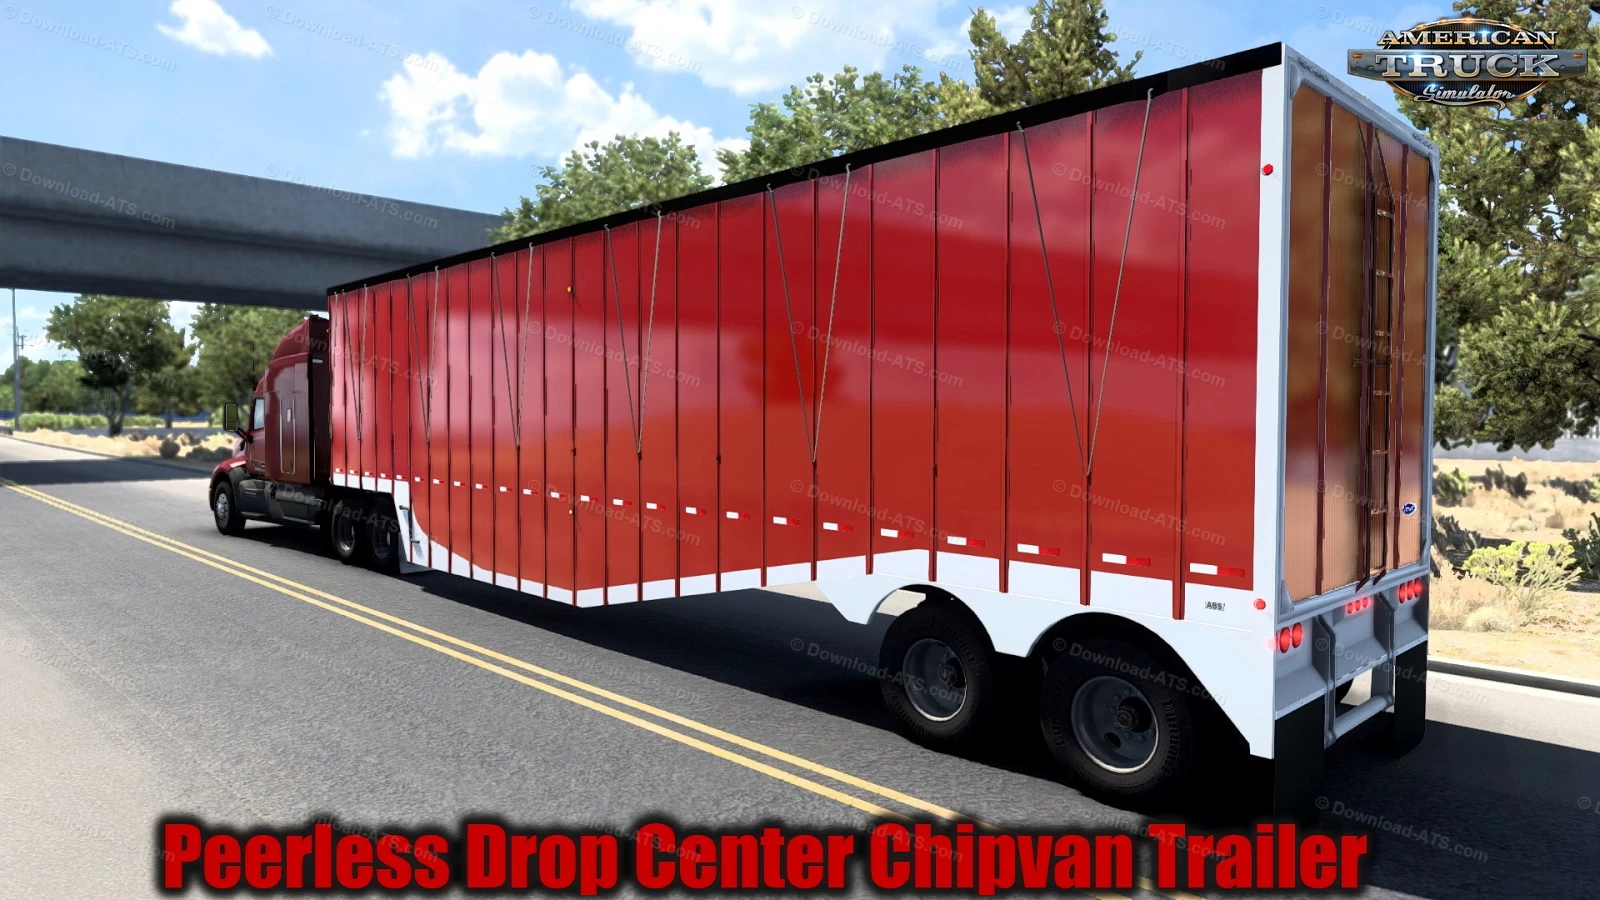 Peerless Drop Center Chipvan Trailer v1.1 (1.41.x) for ATS